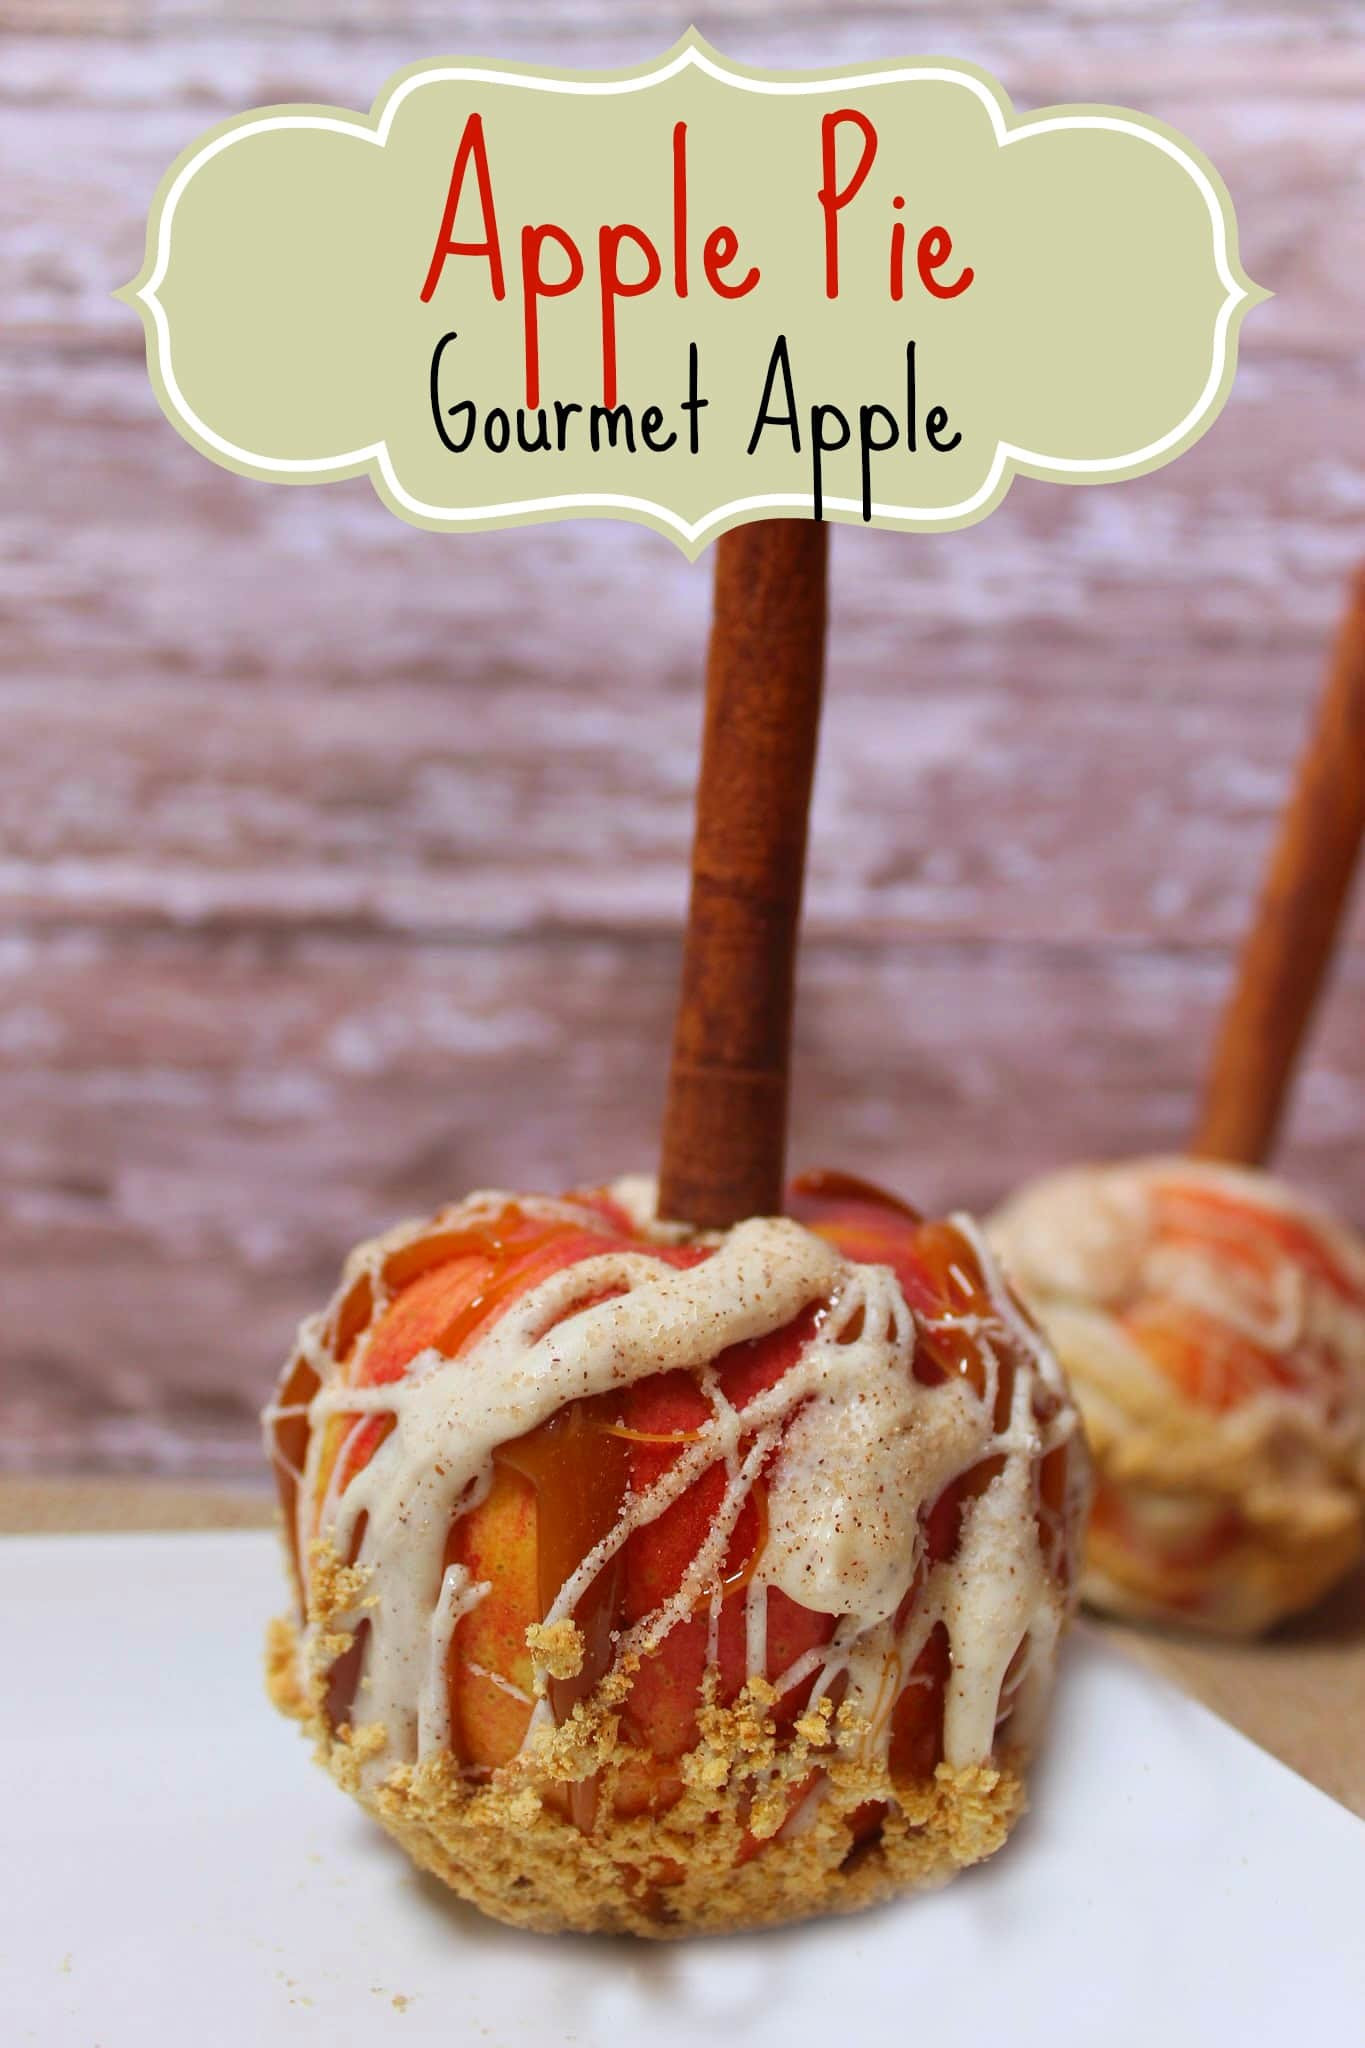 Gourmet Pie Recipes
 Apple Pie Caramel Apple A Gourmet Caramel Apple Recipe